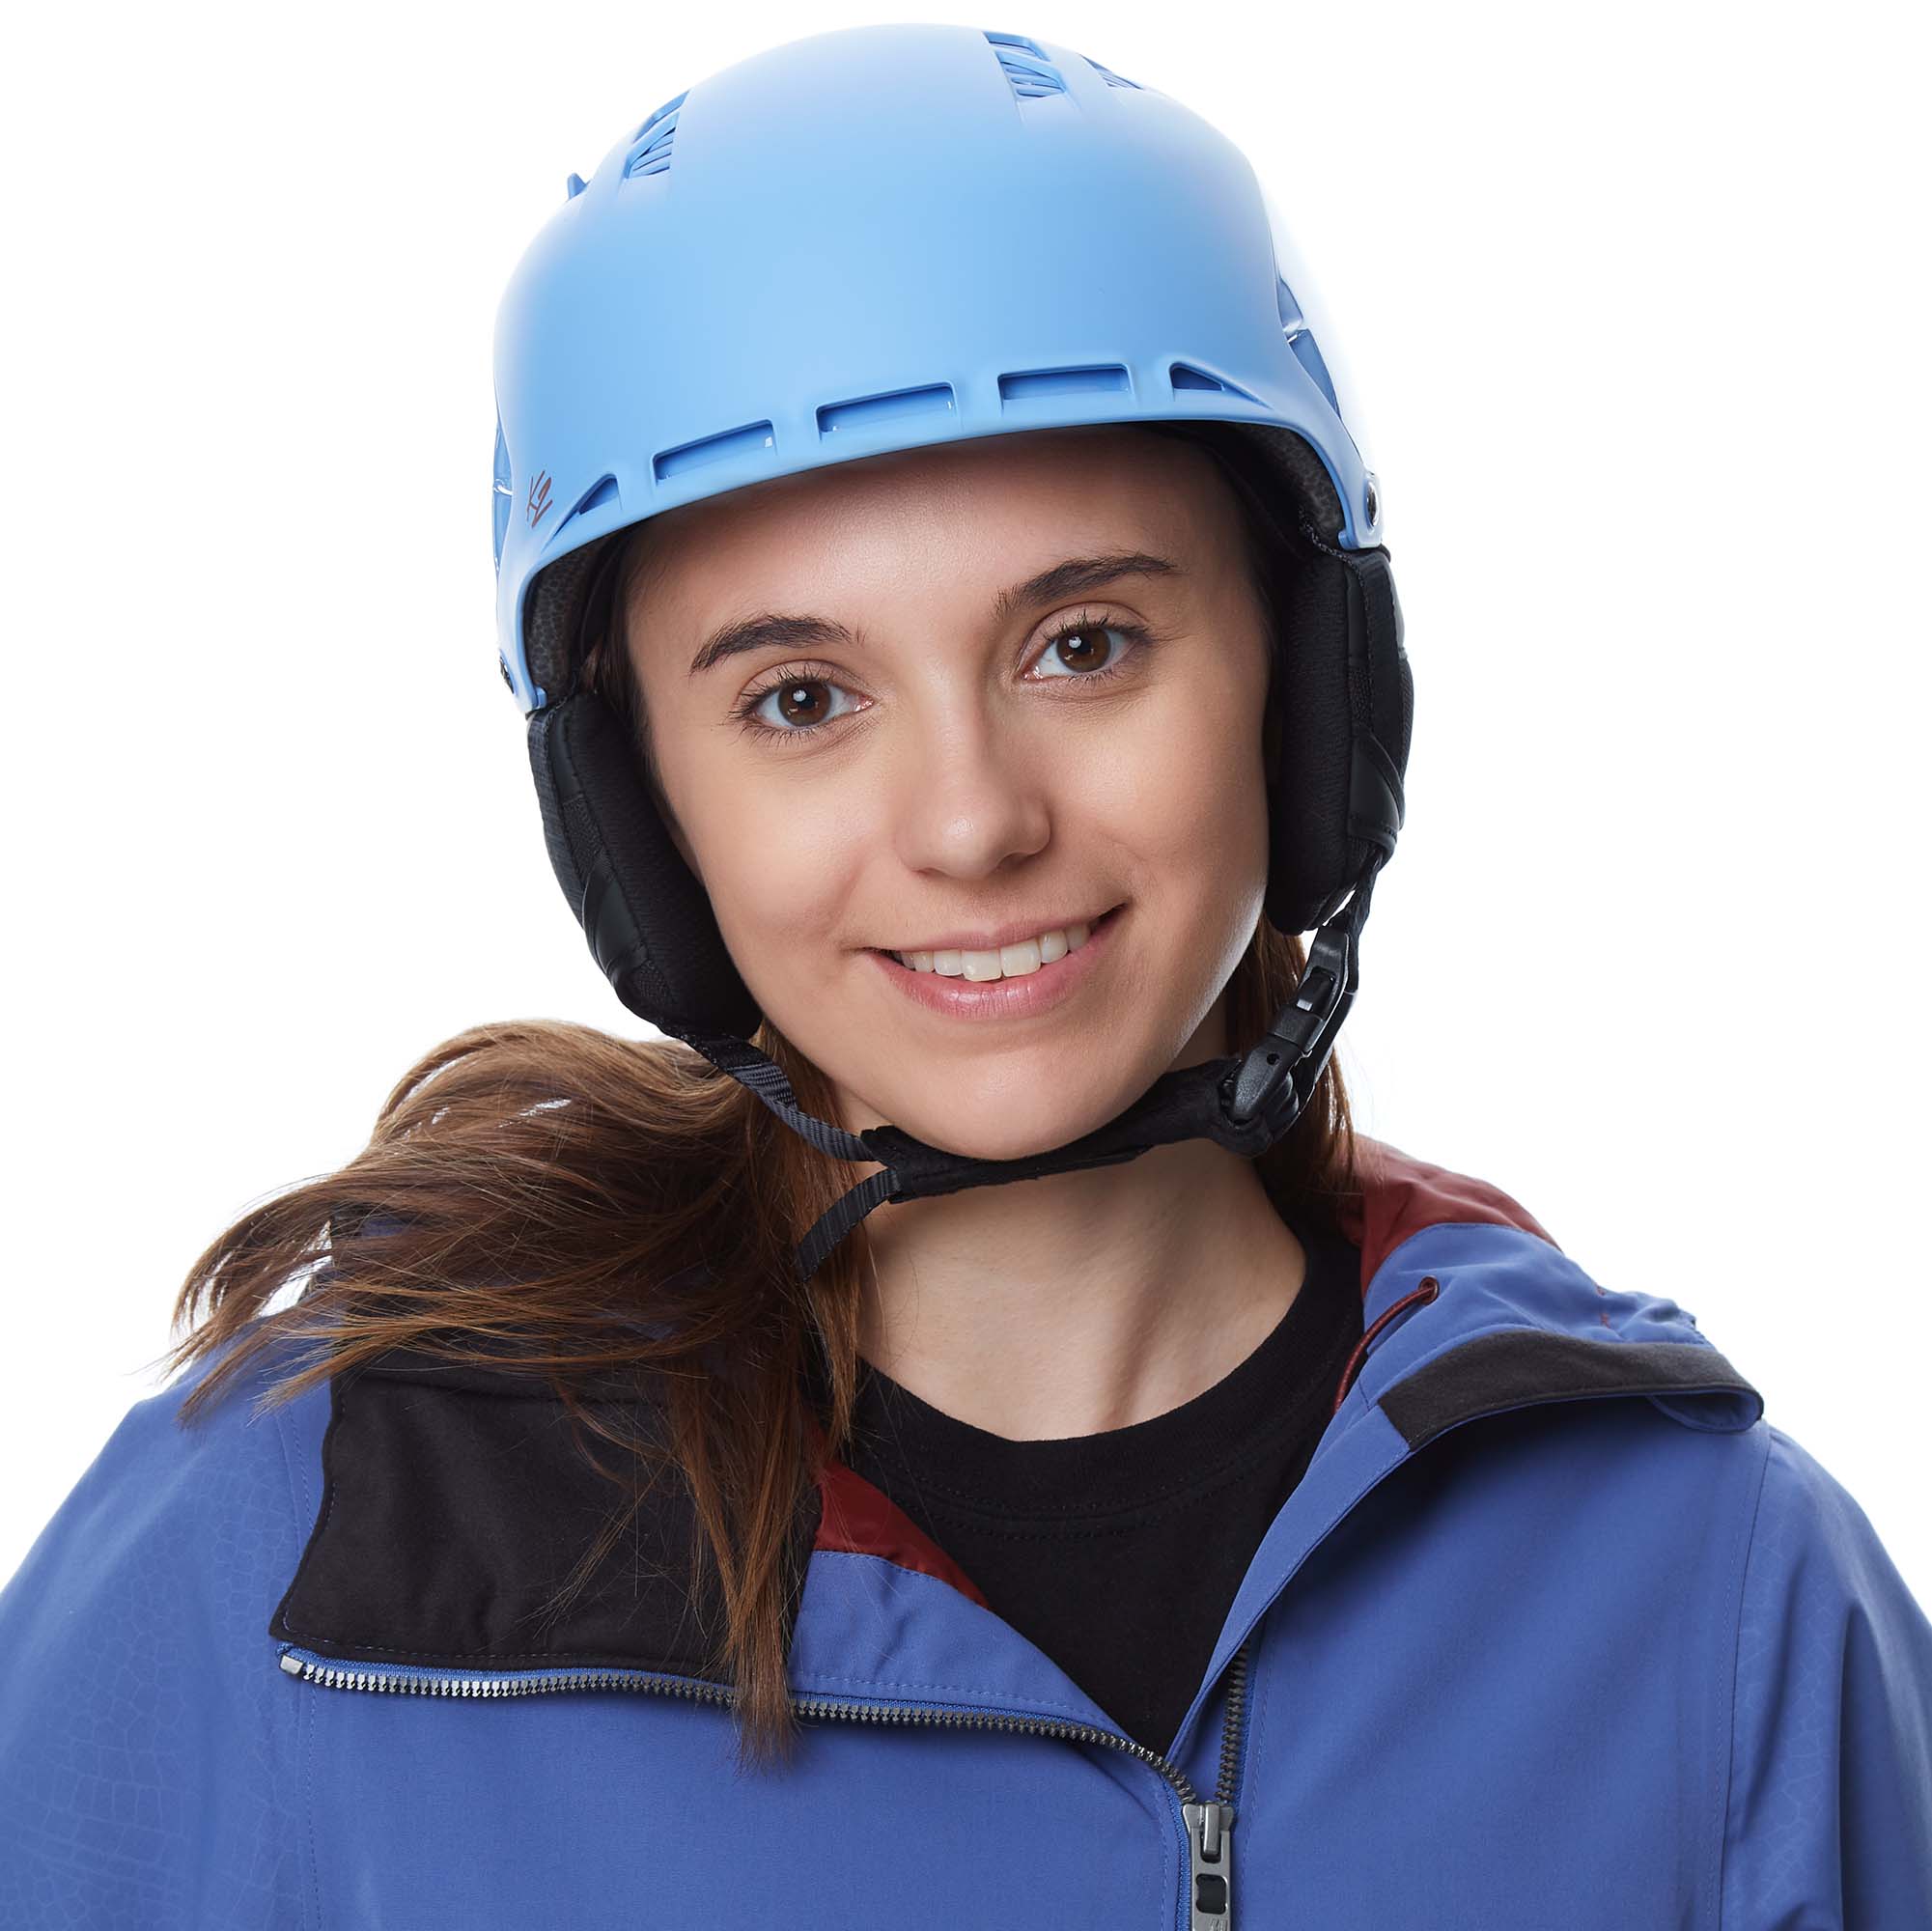 K2 Virtue Women's Snow/Bike Helmet